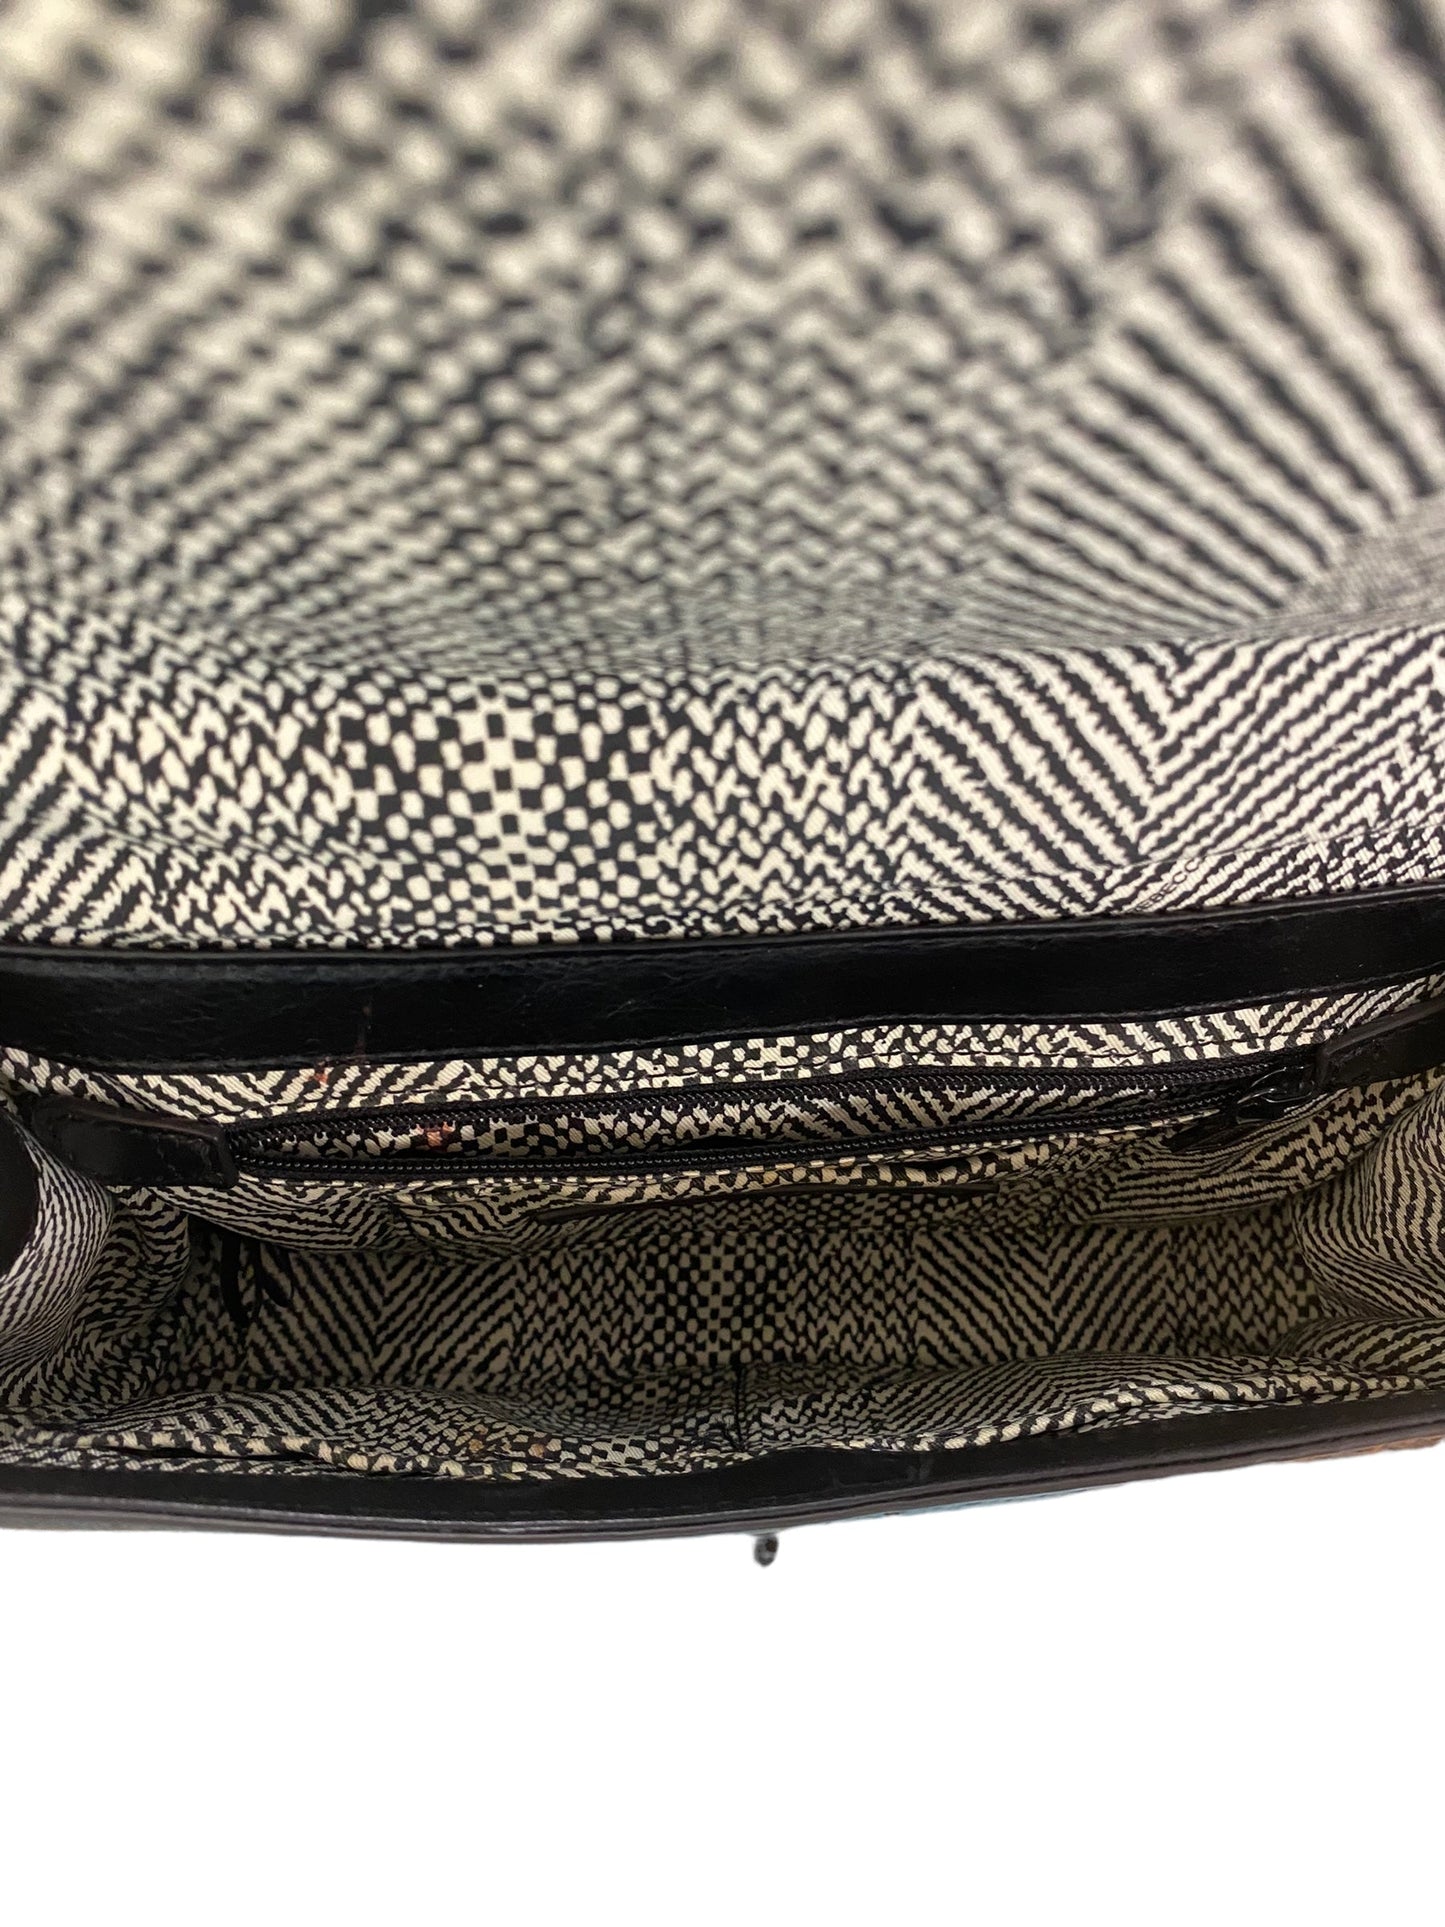 Handbag Designer By Rebecca Minkoff  Size: Medium